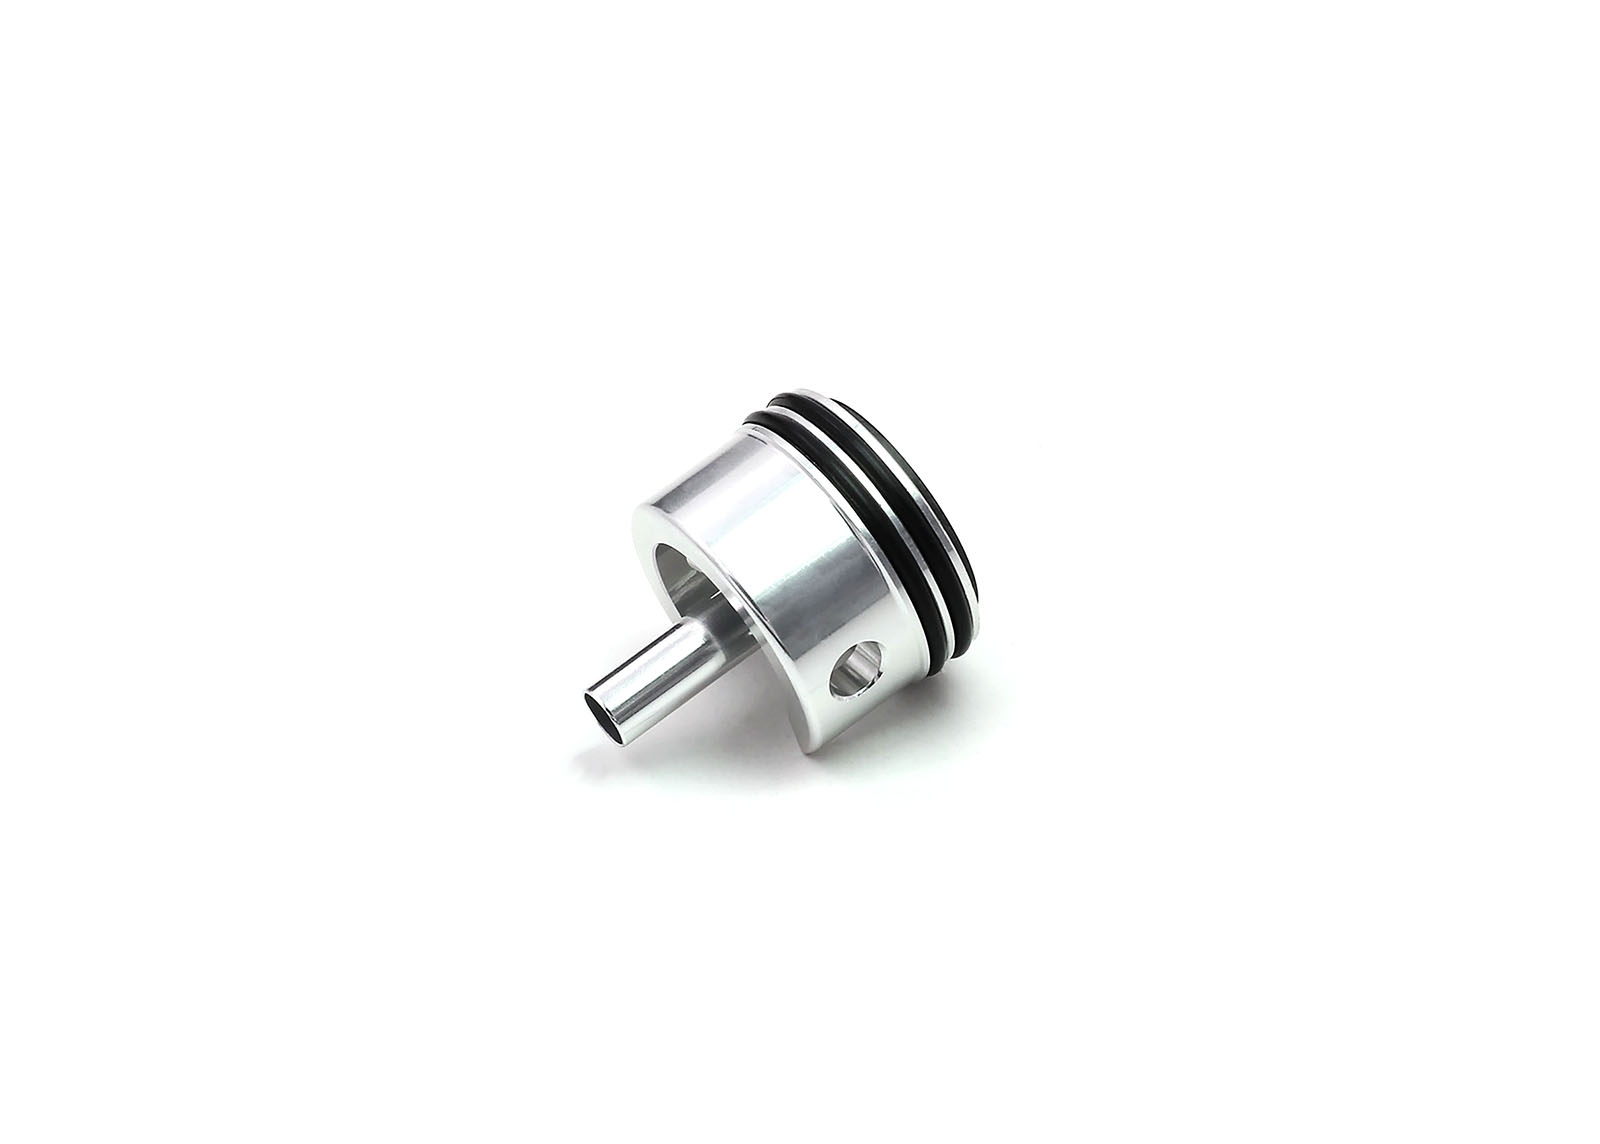 Aluminum Cylinder Head for CA Series AEG (AUG/G36C) - Modify Airsoft parts